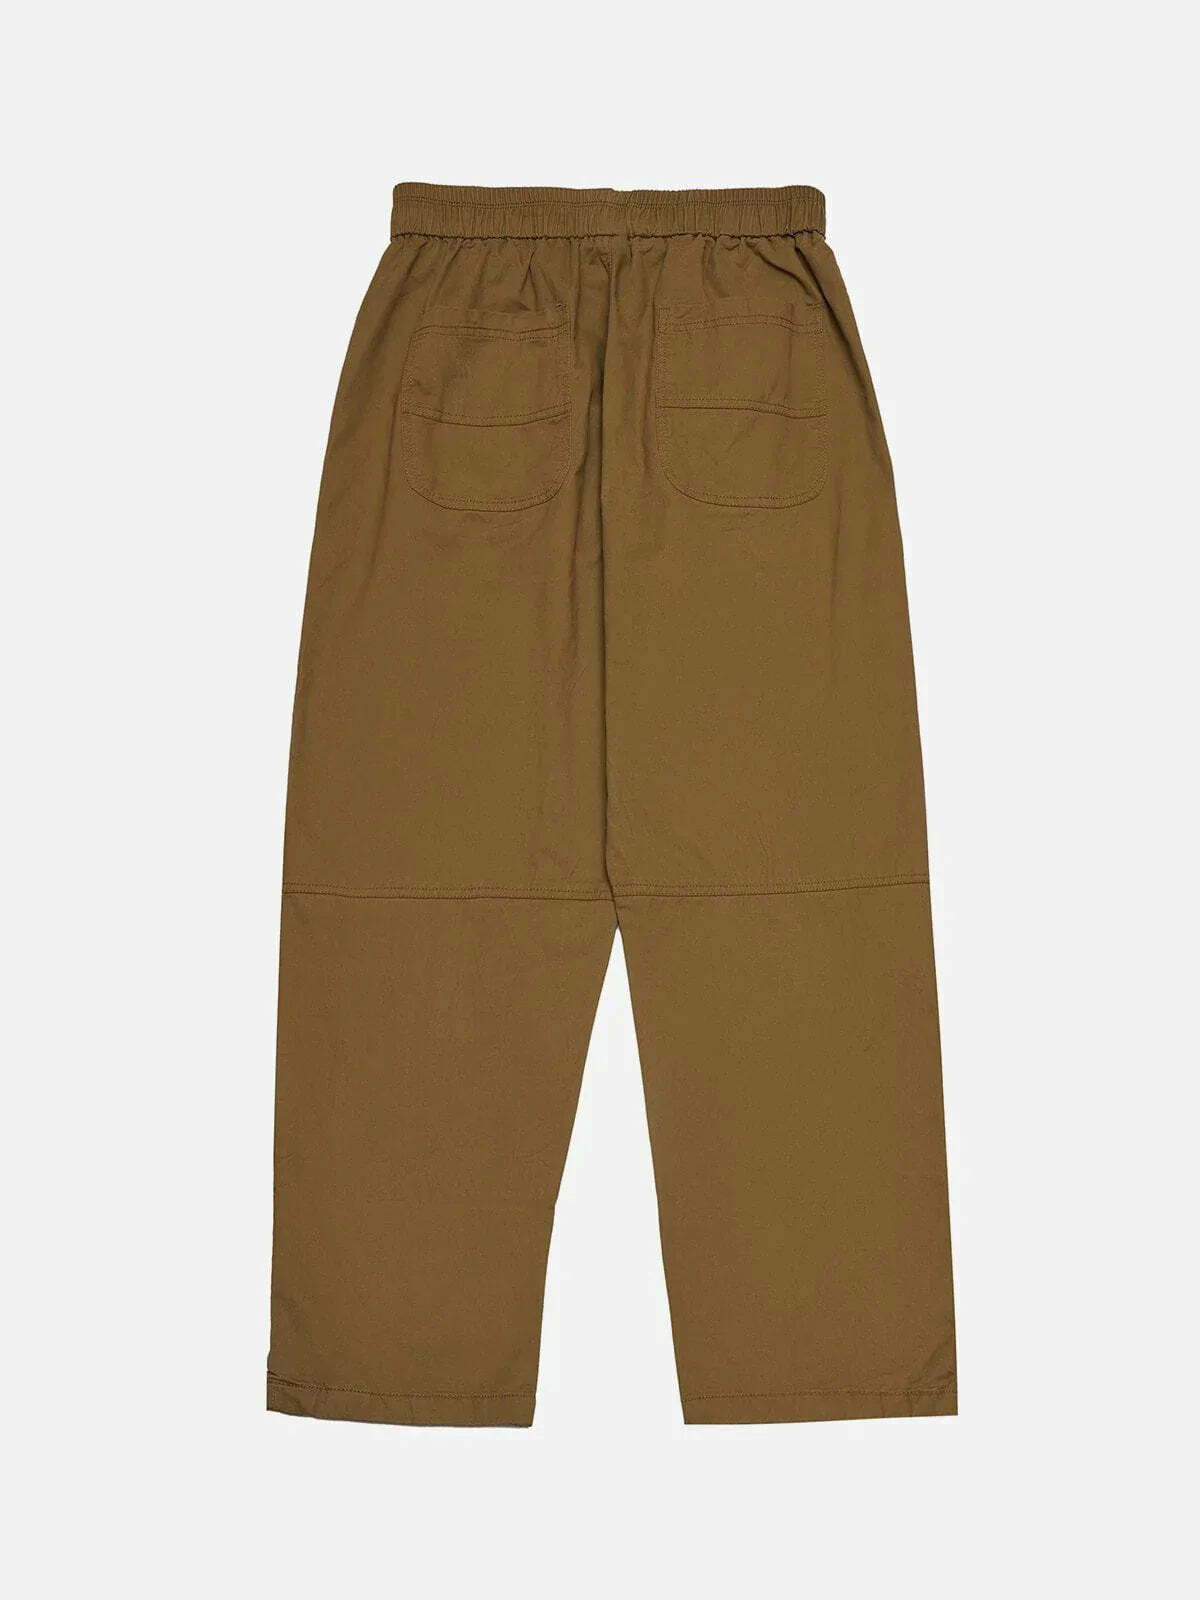 vintage solid color loose pants urban sophistication & comfort 4670